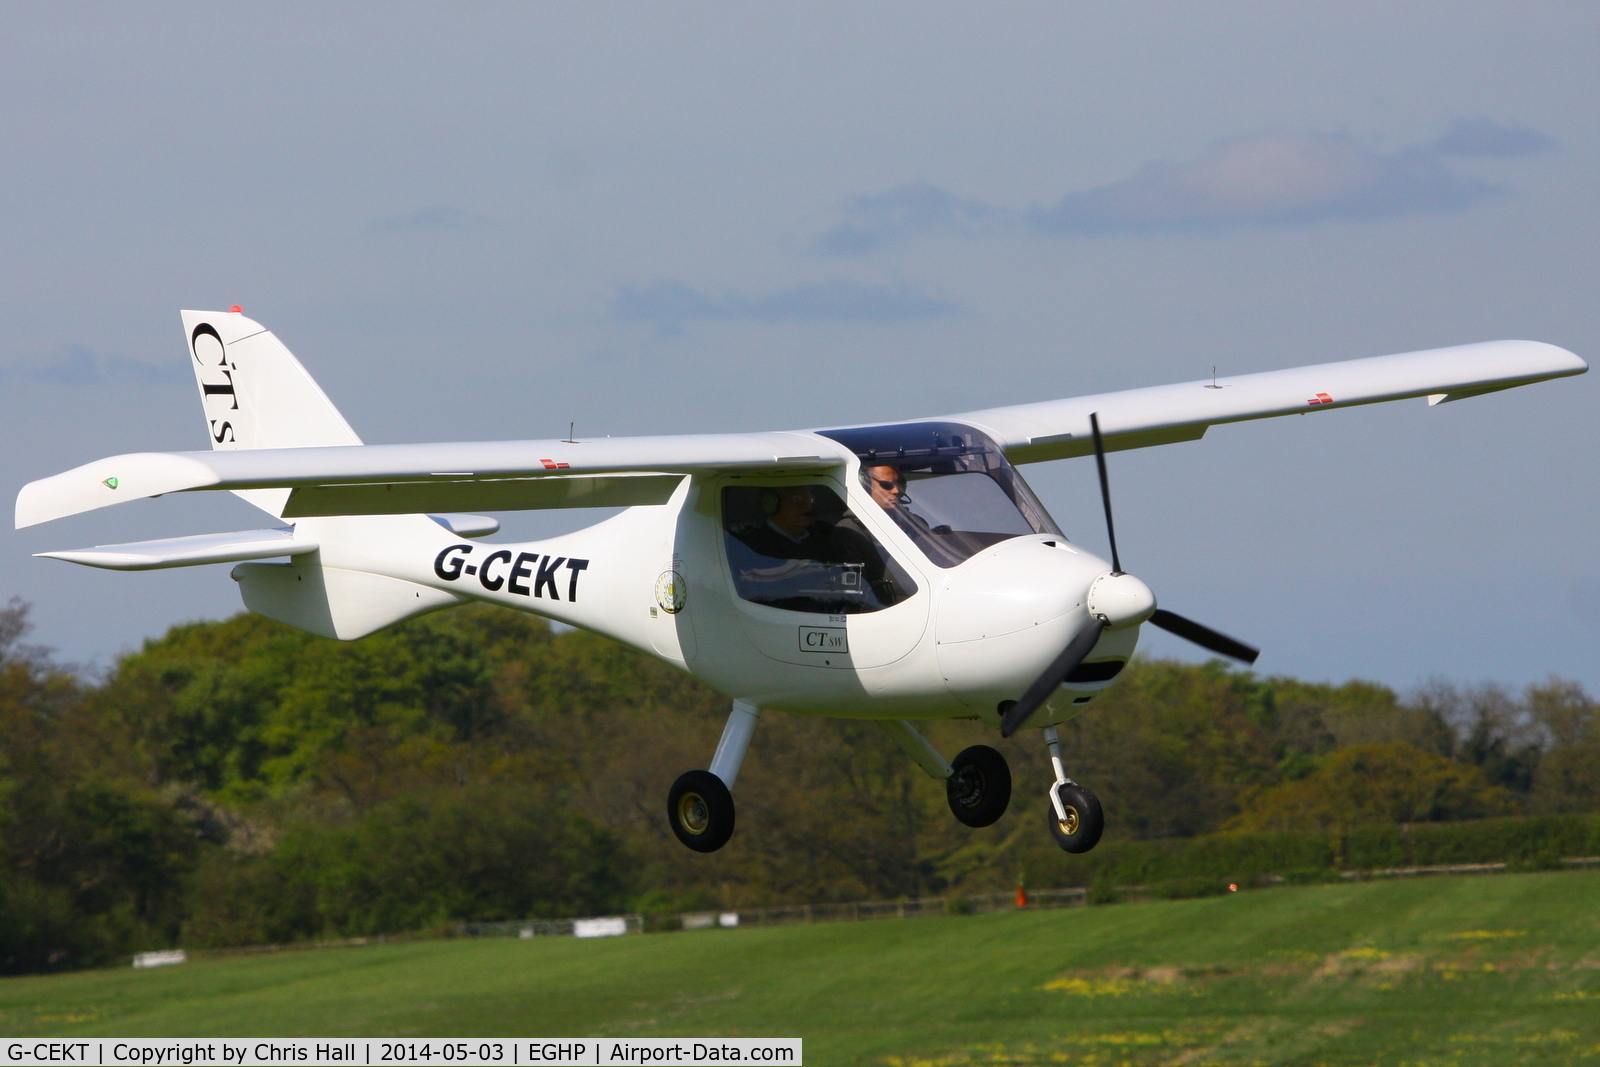 G-CEKT, 2007 Flight Design CTSW C/N 8272, at the 2014 Microlight Trade Fair, Popham